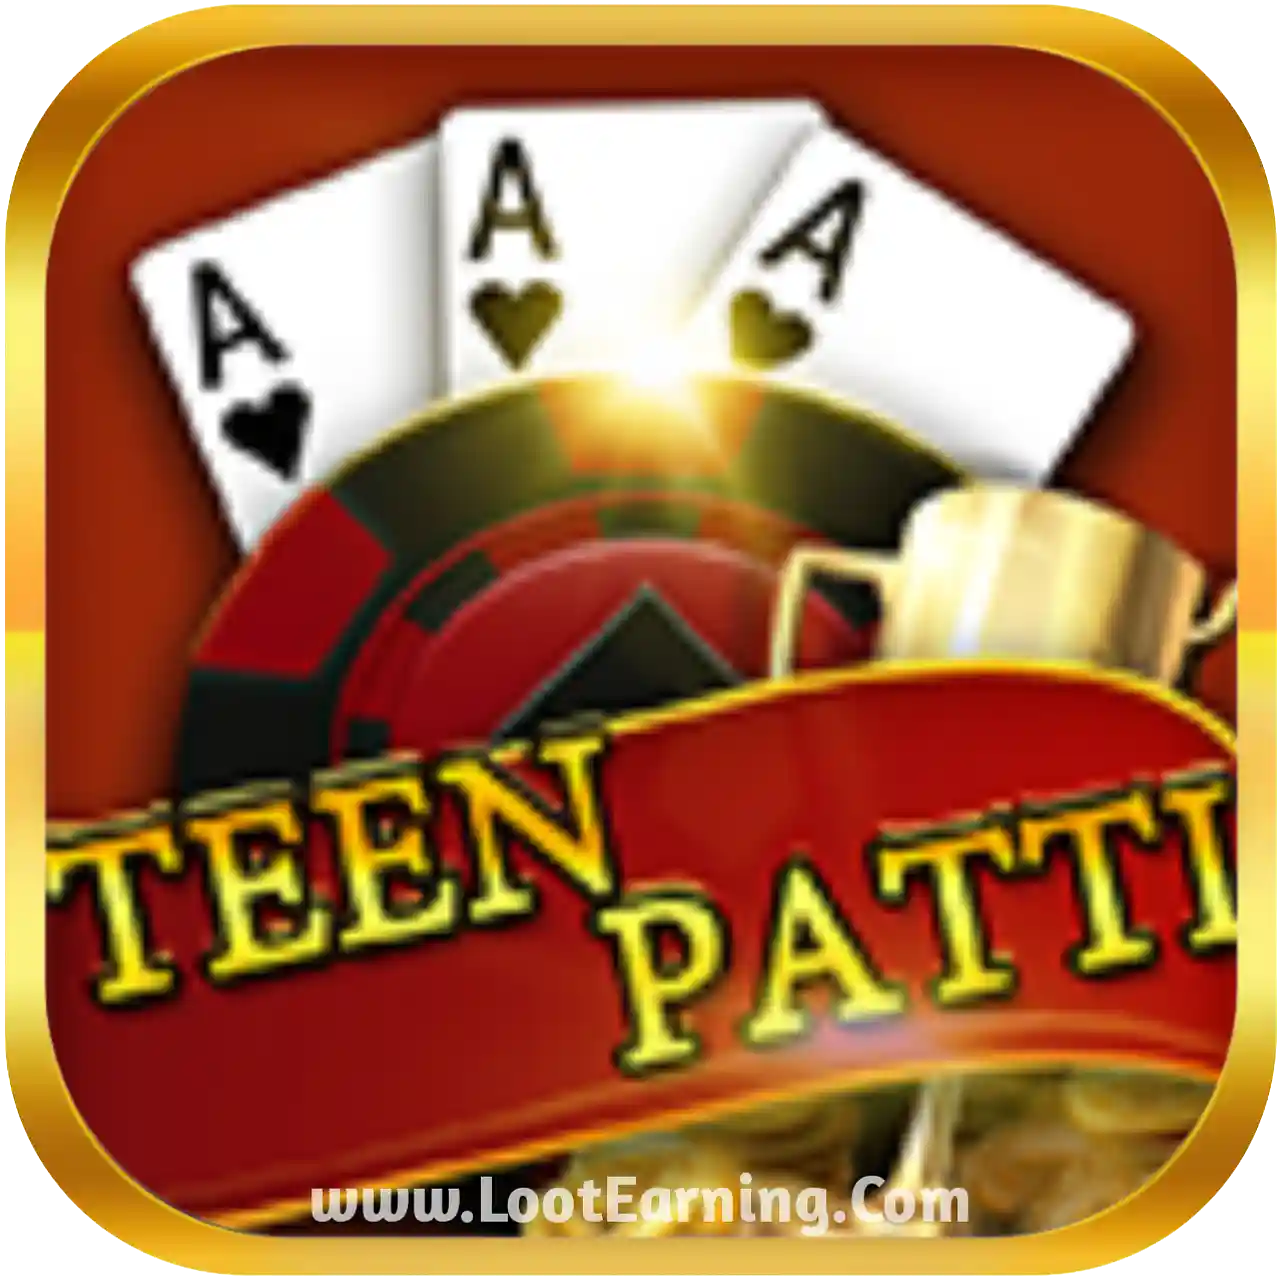 Meta Teen Patti Logo - India Game Download